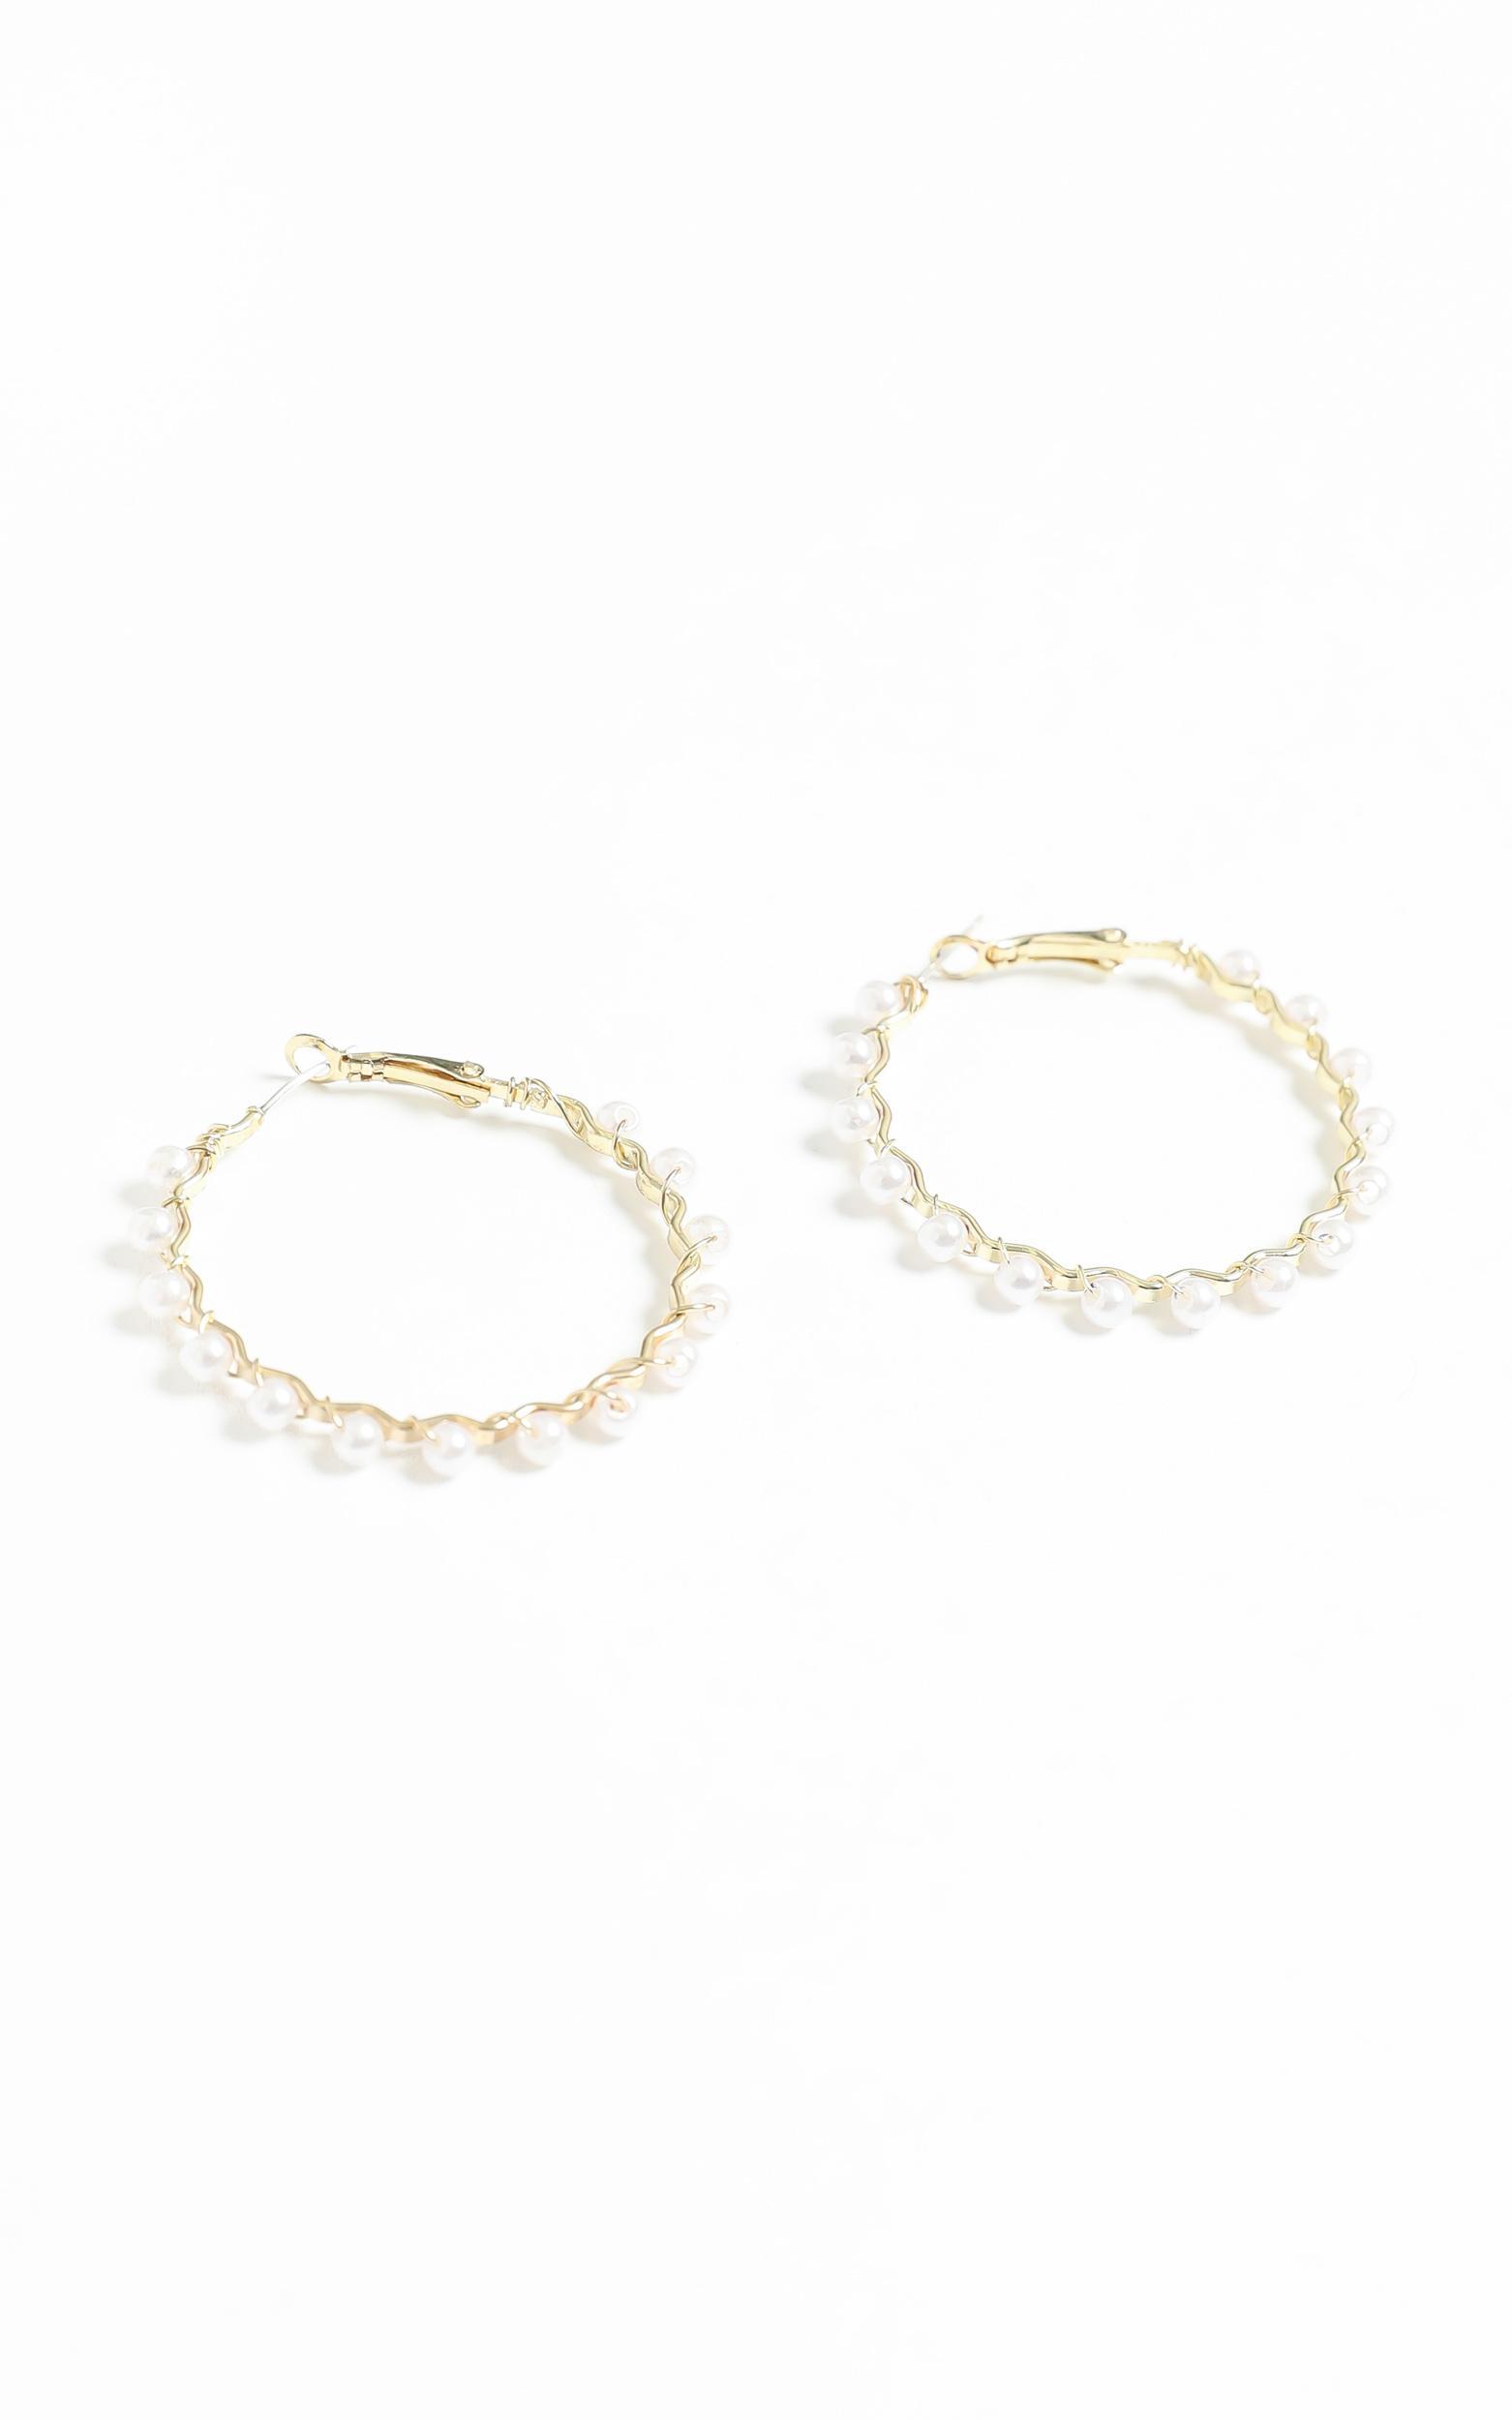 Hoop Earrings with Pearls in Gold, , hi-res image number null